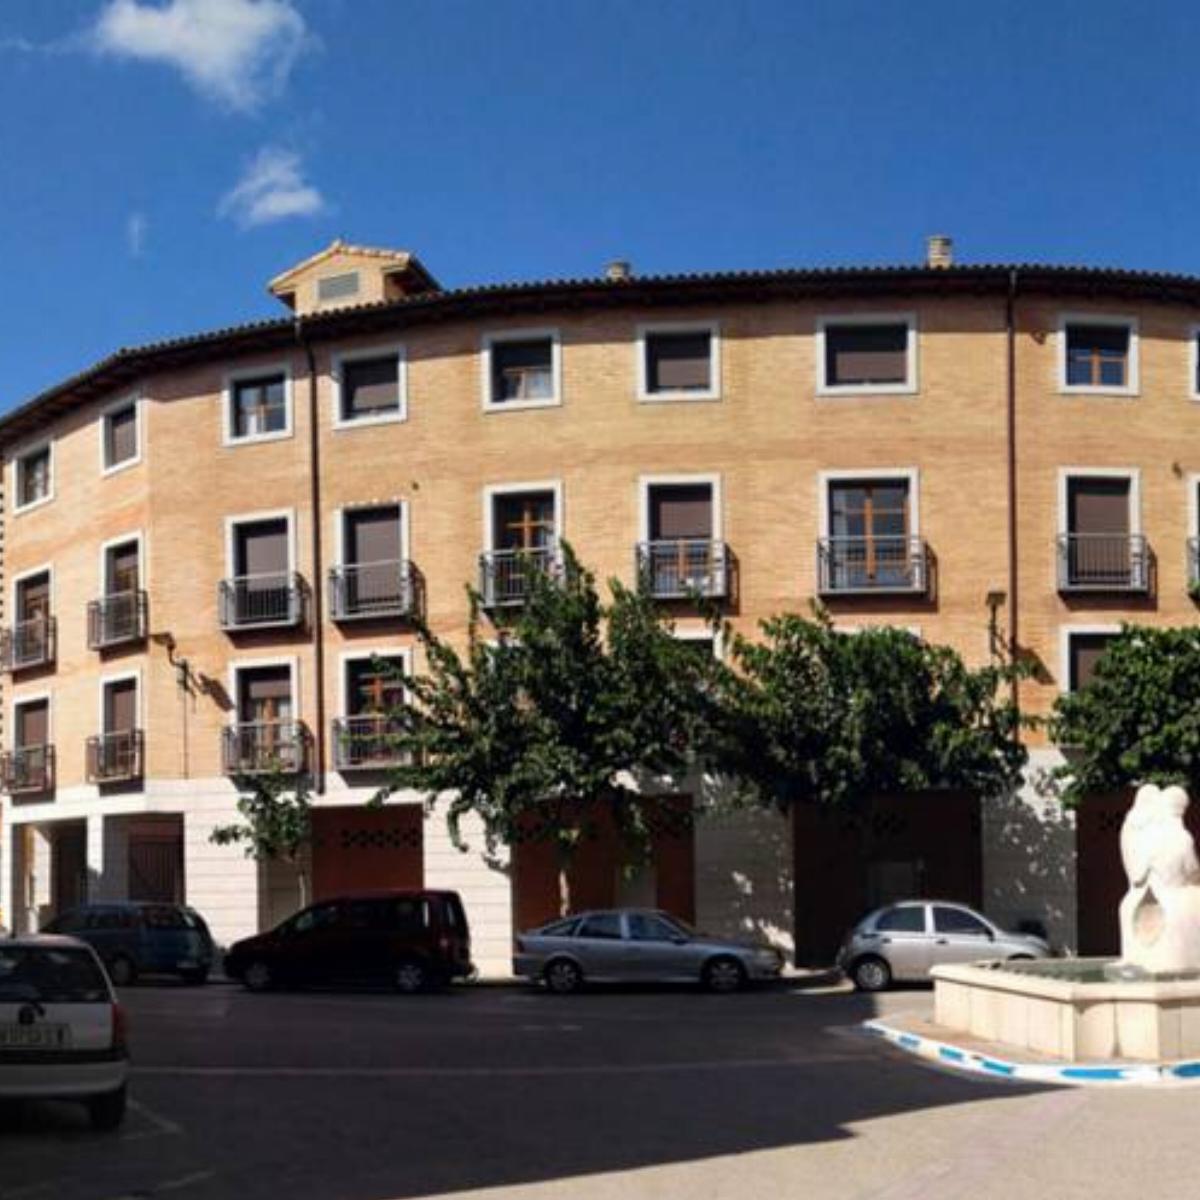 LaFonda1-2-B Hotel Borja Spain